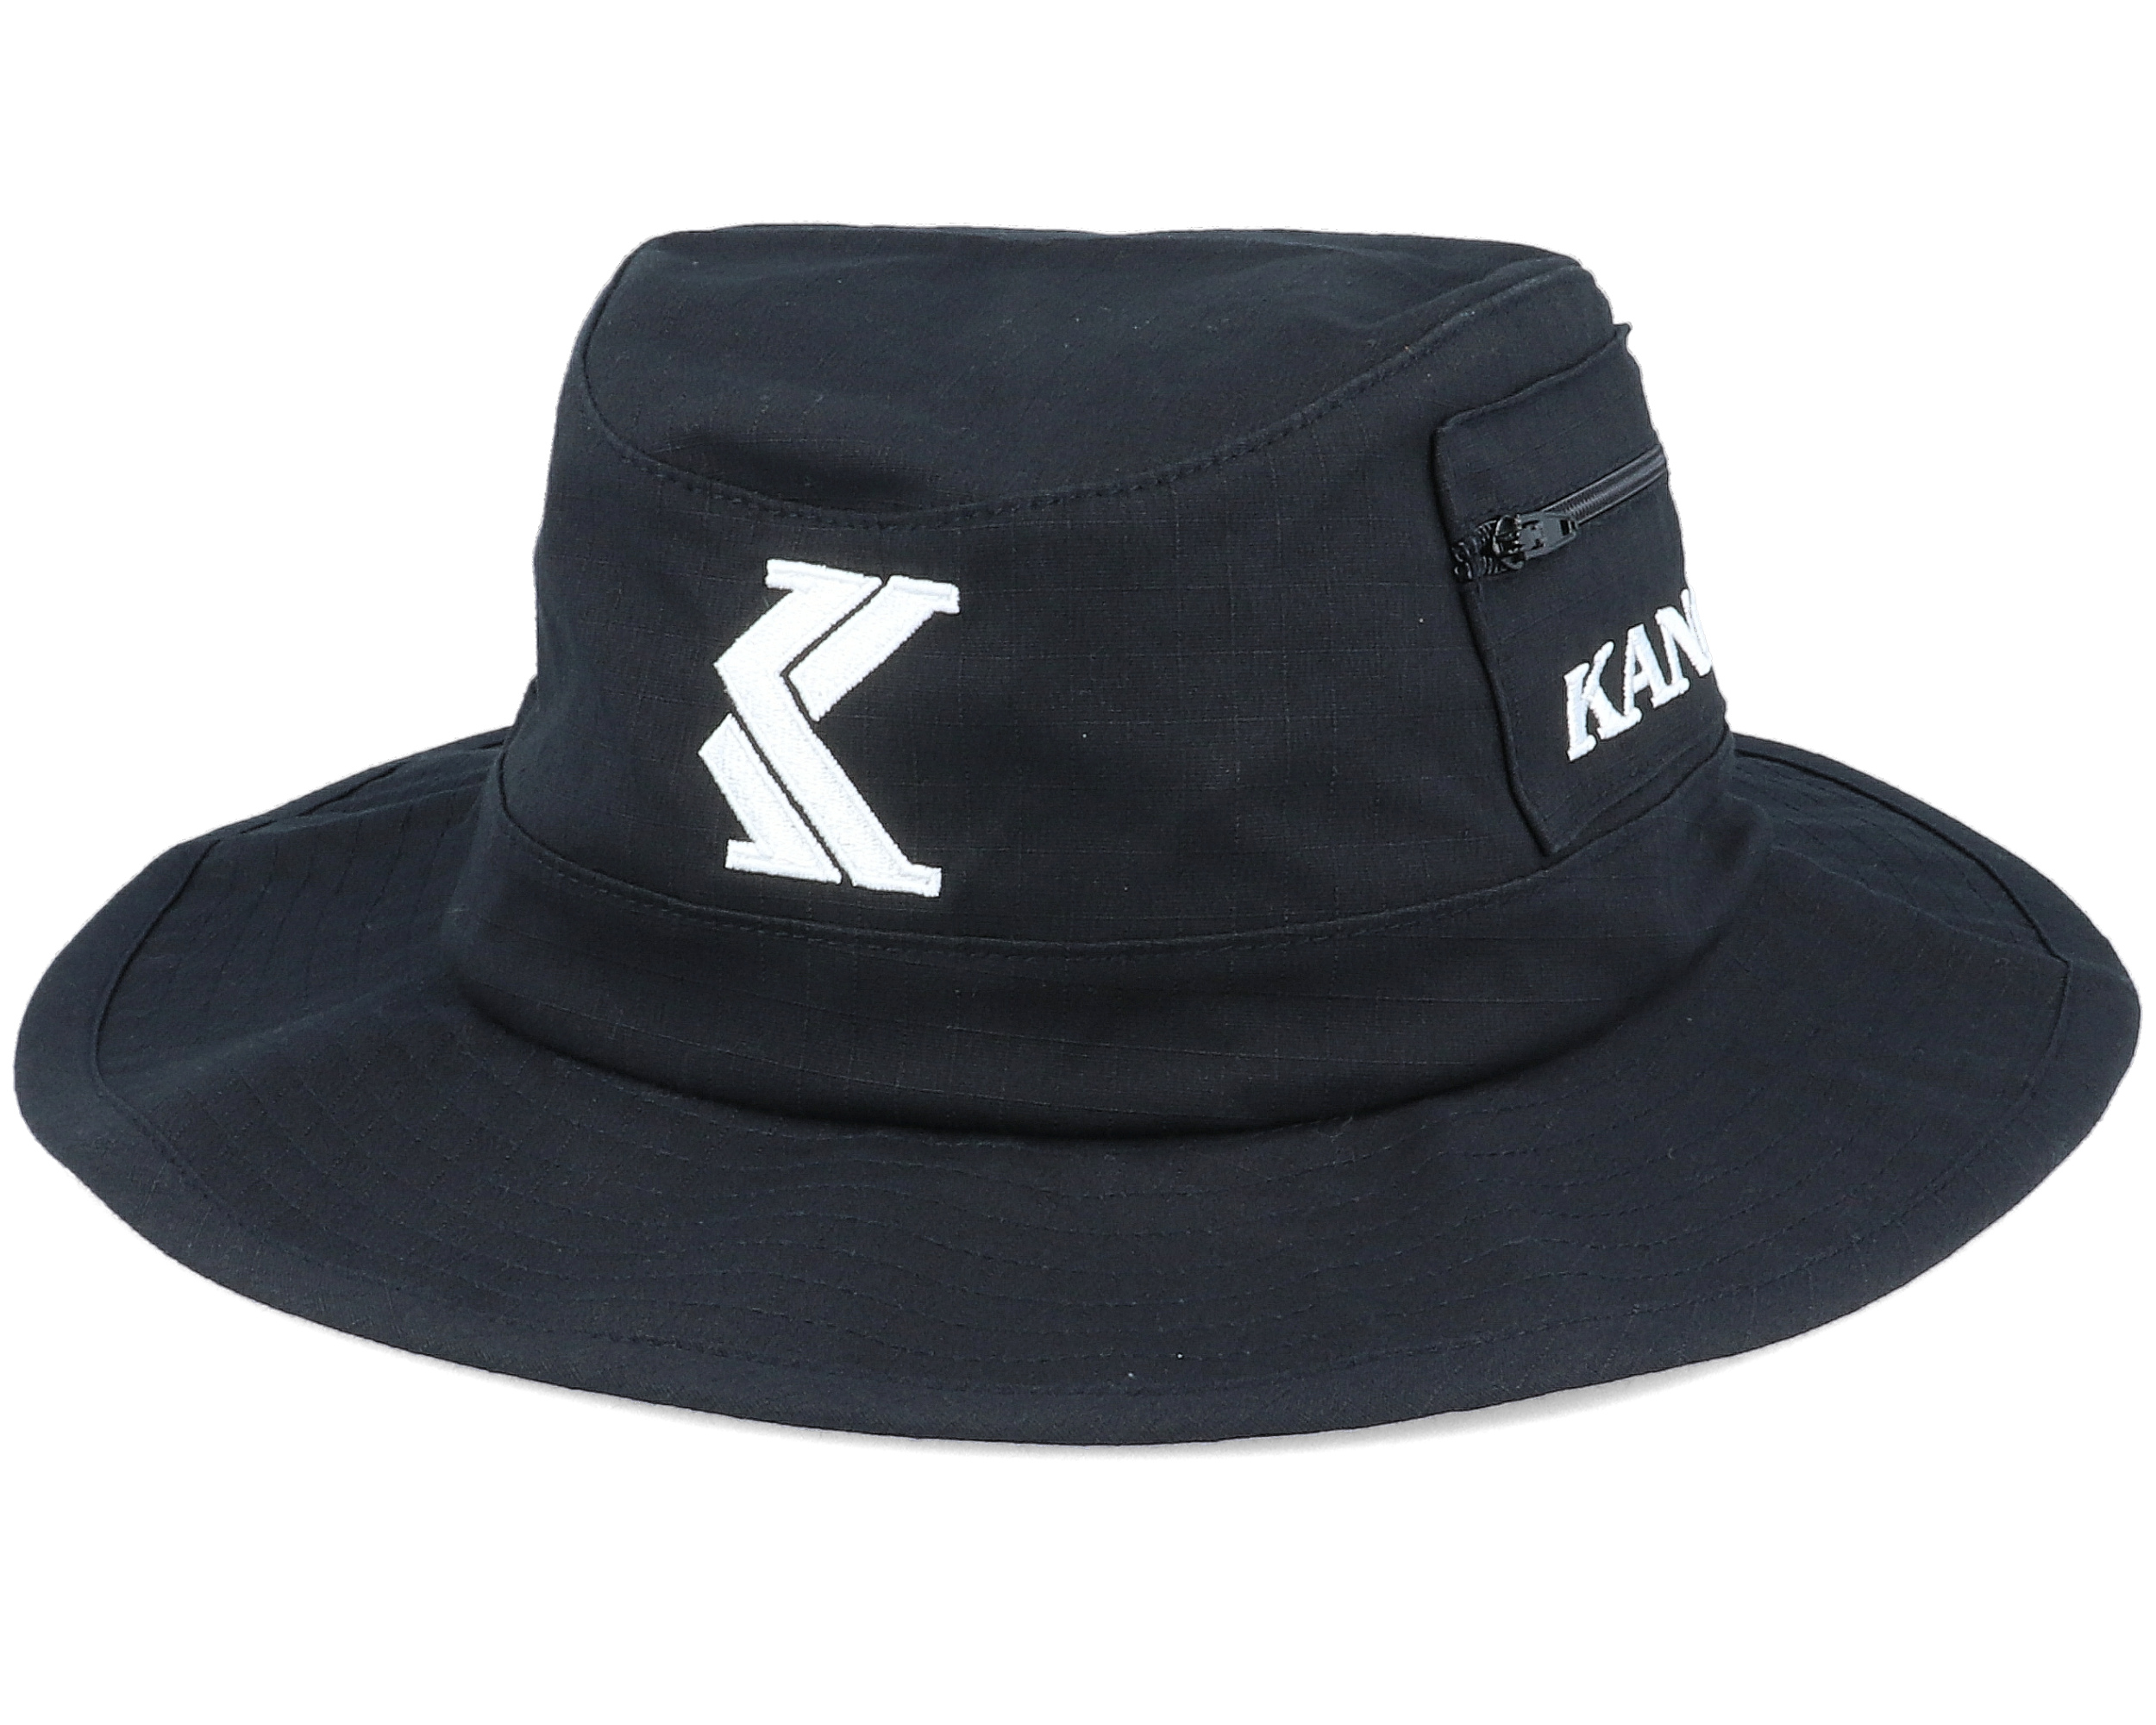 Fisher Hat Black Bucket - Karl Kani hat